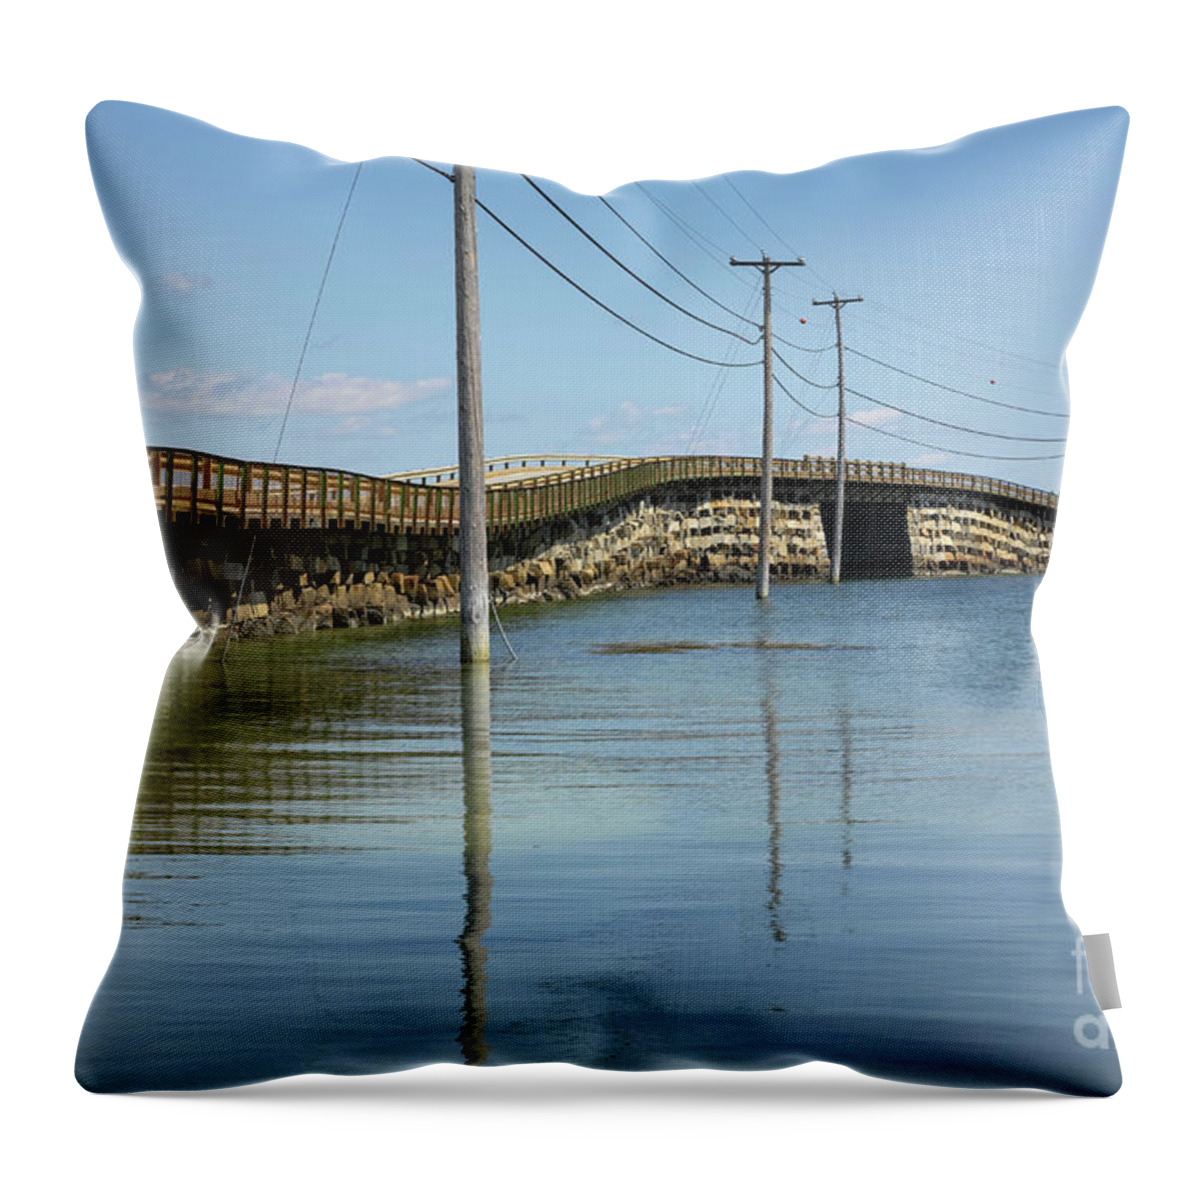 Landscape Throw Pillow featuring the photograph Bailey Island Bridge - Harpswell Maine USA by Erin Paul Donovan